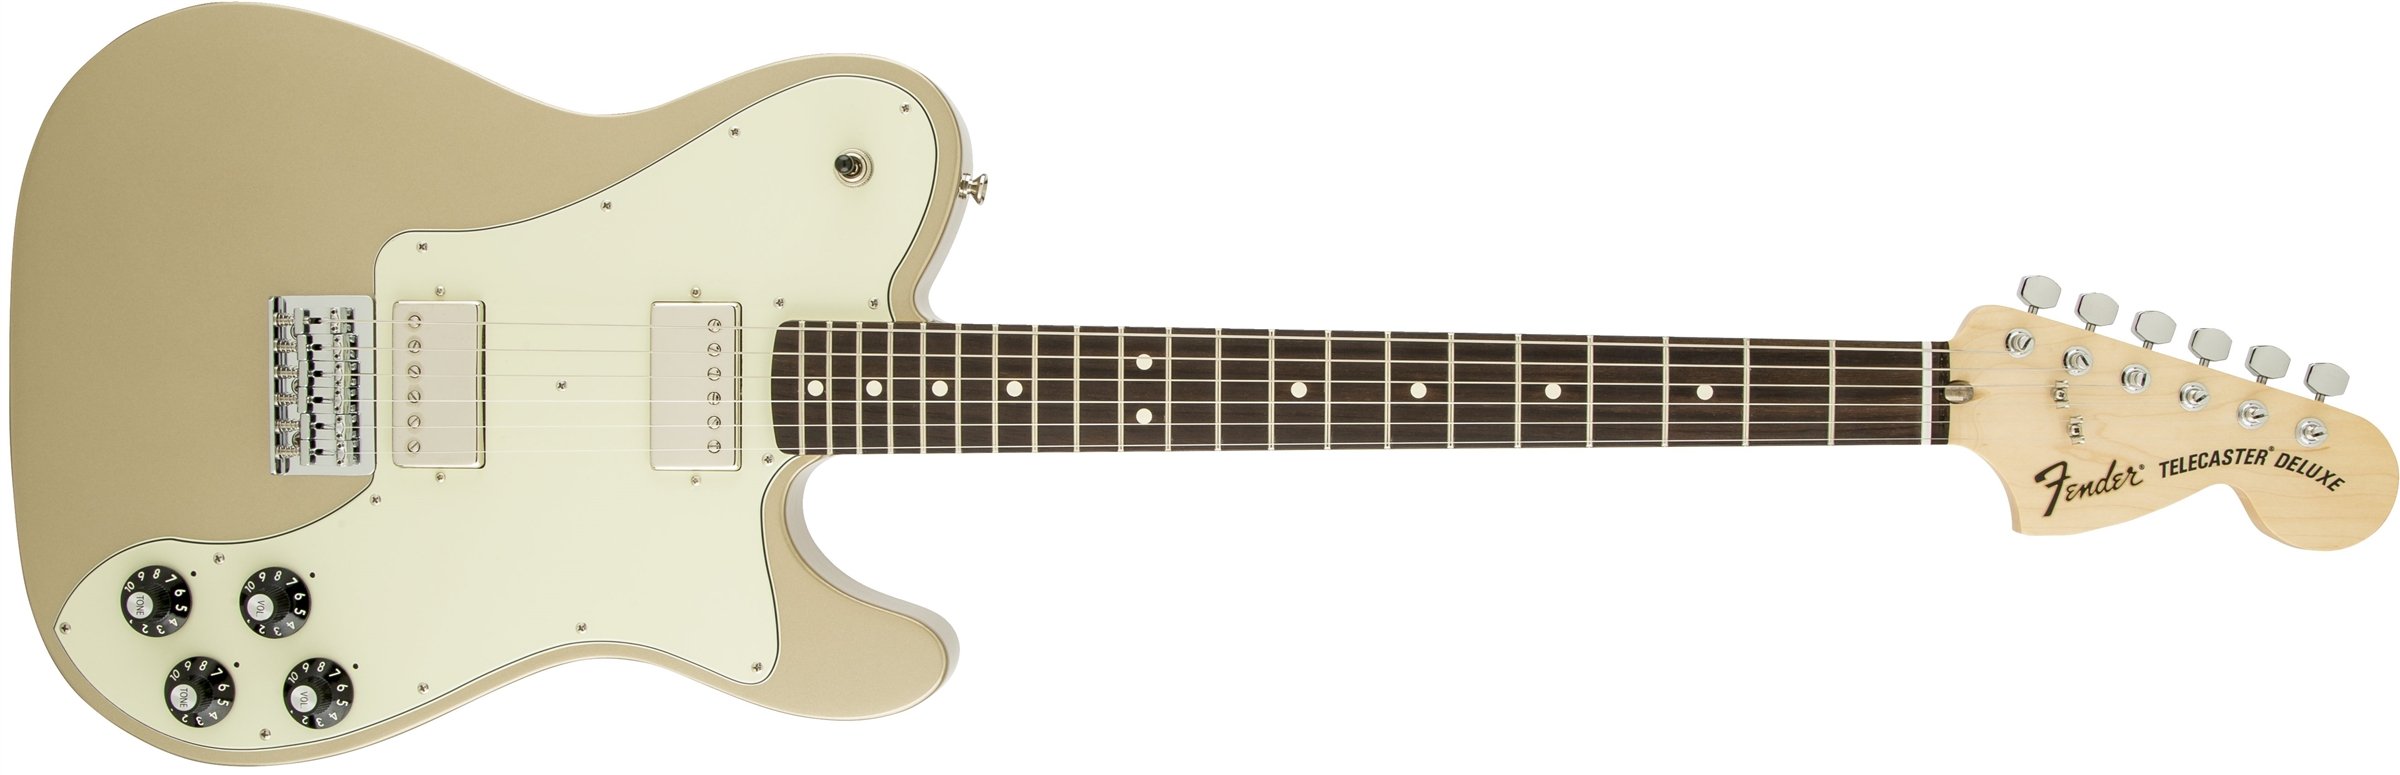 Fender Chris Shiflett Deluxe Telecaster Electric Guitar, with hard case $767.99